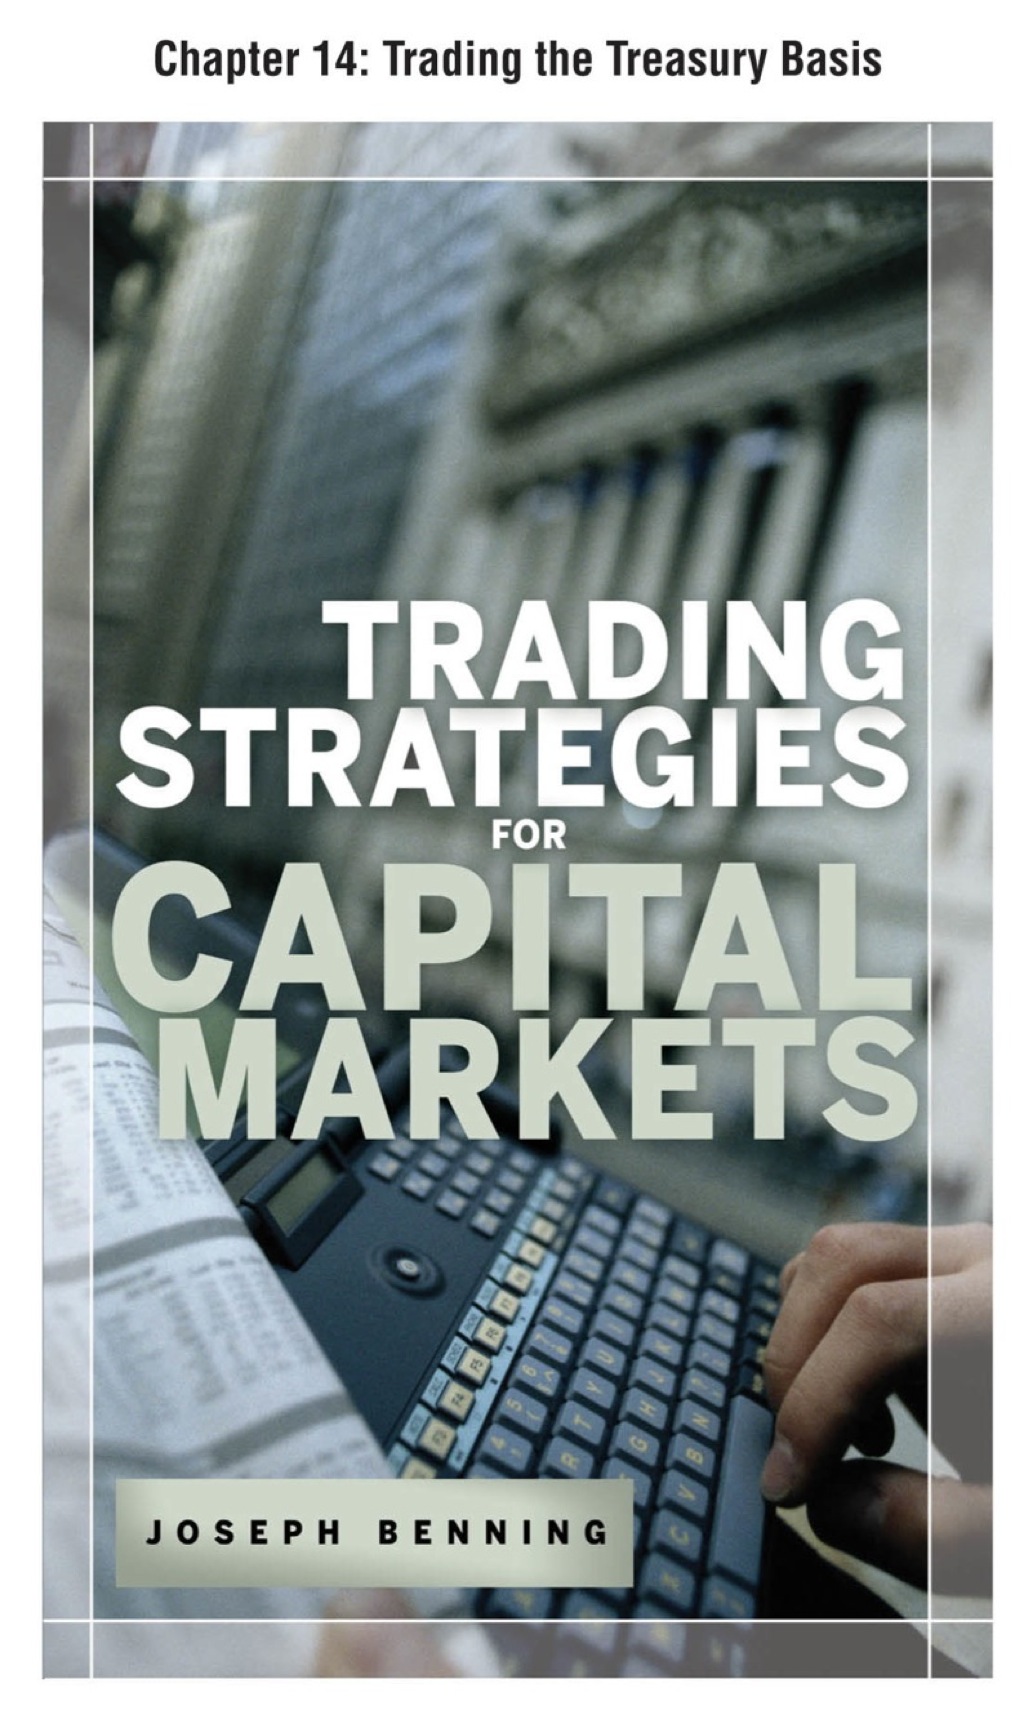 Trading Stategies for Capital Markets  Chapter 14 - Trading the Treasury Basis (eBook) - Joseph Benning,